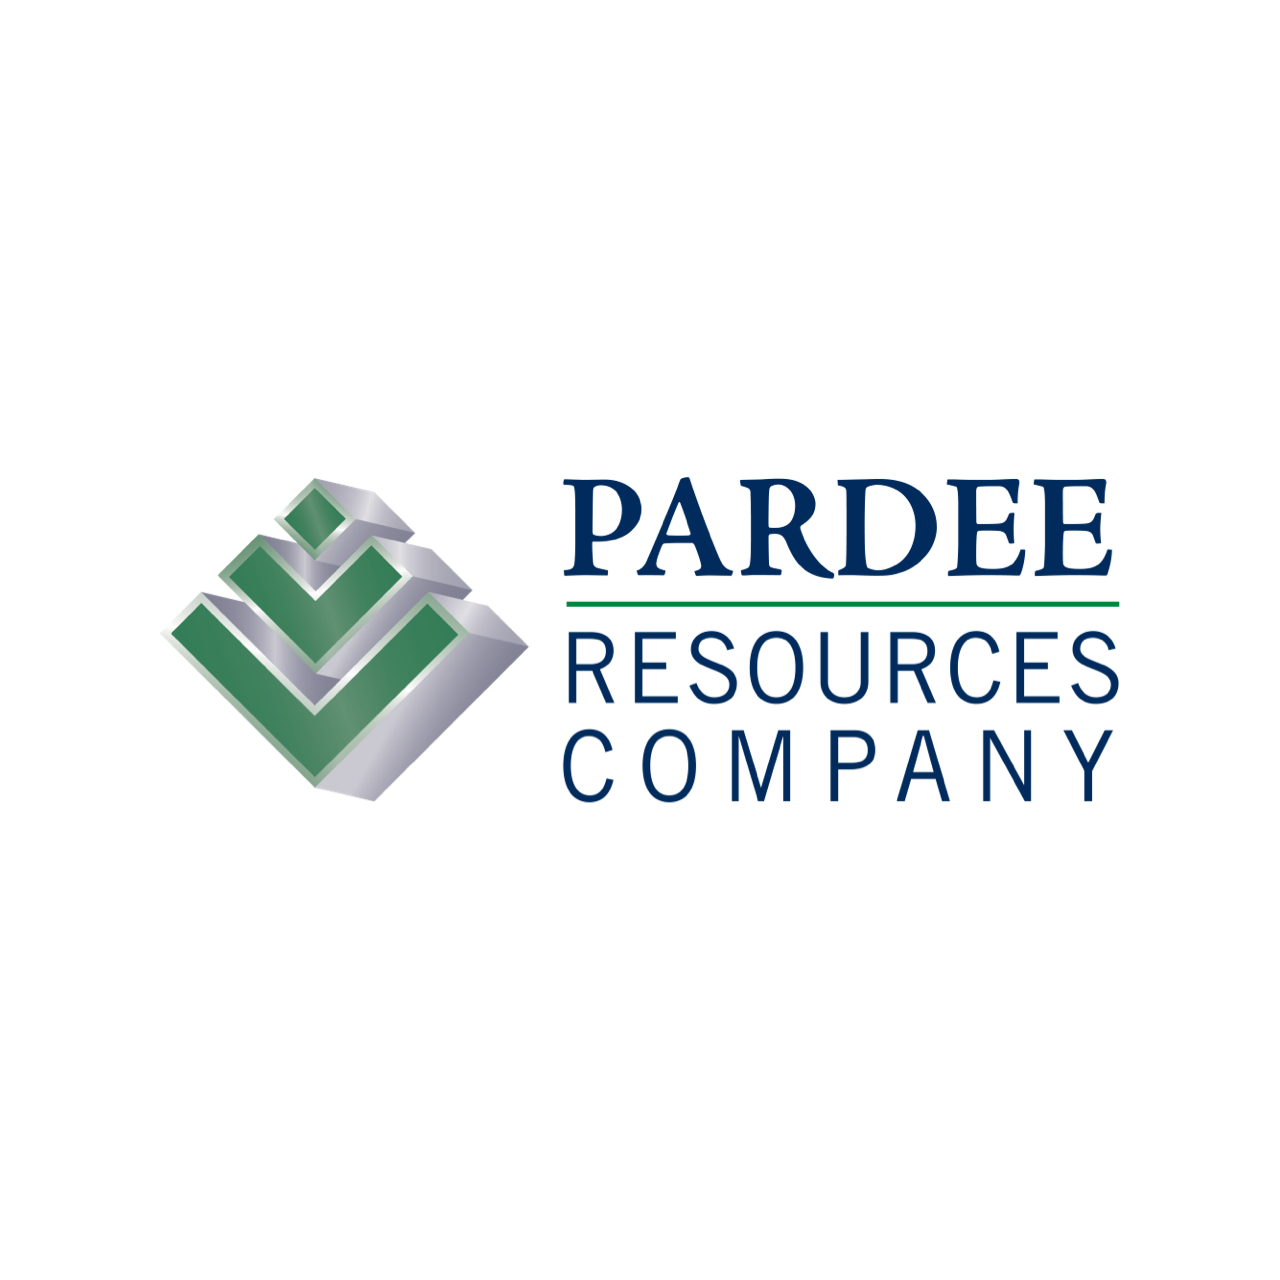 Pardee Resources Company